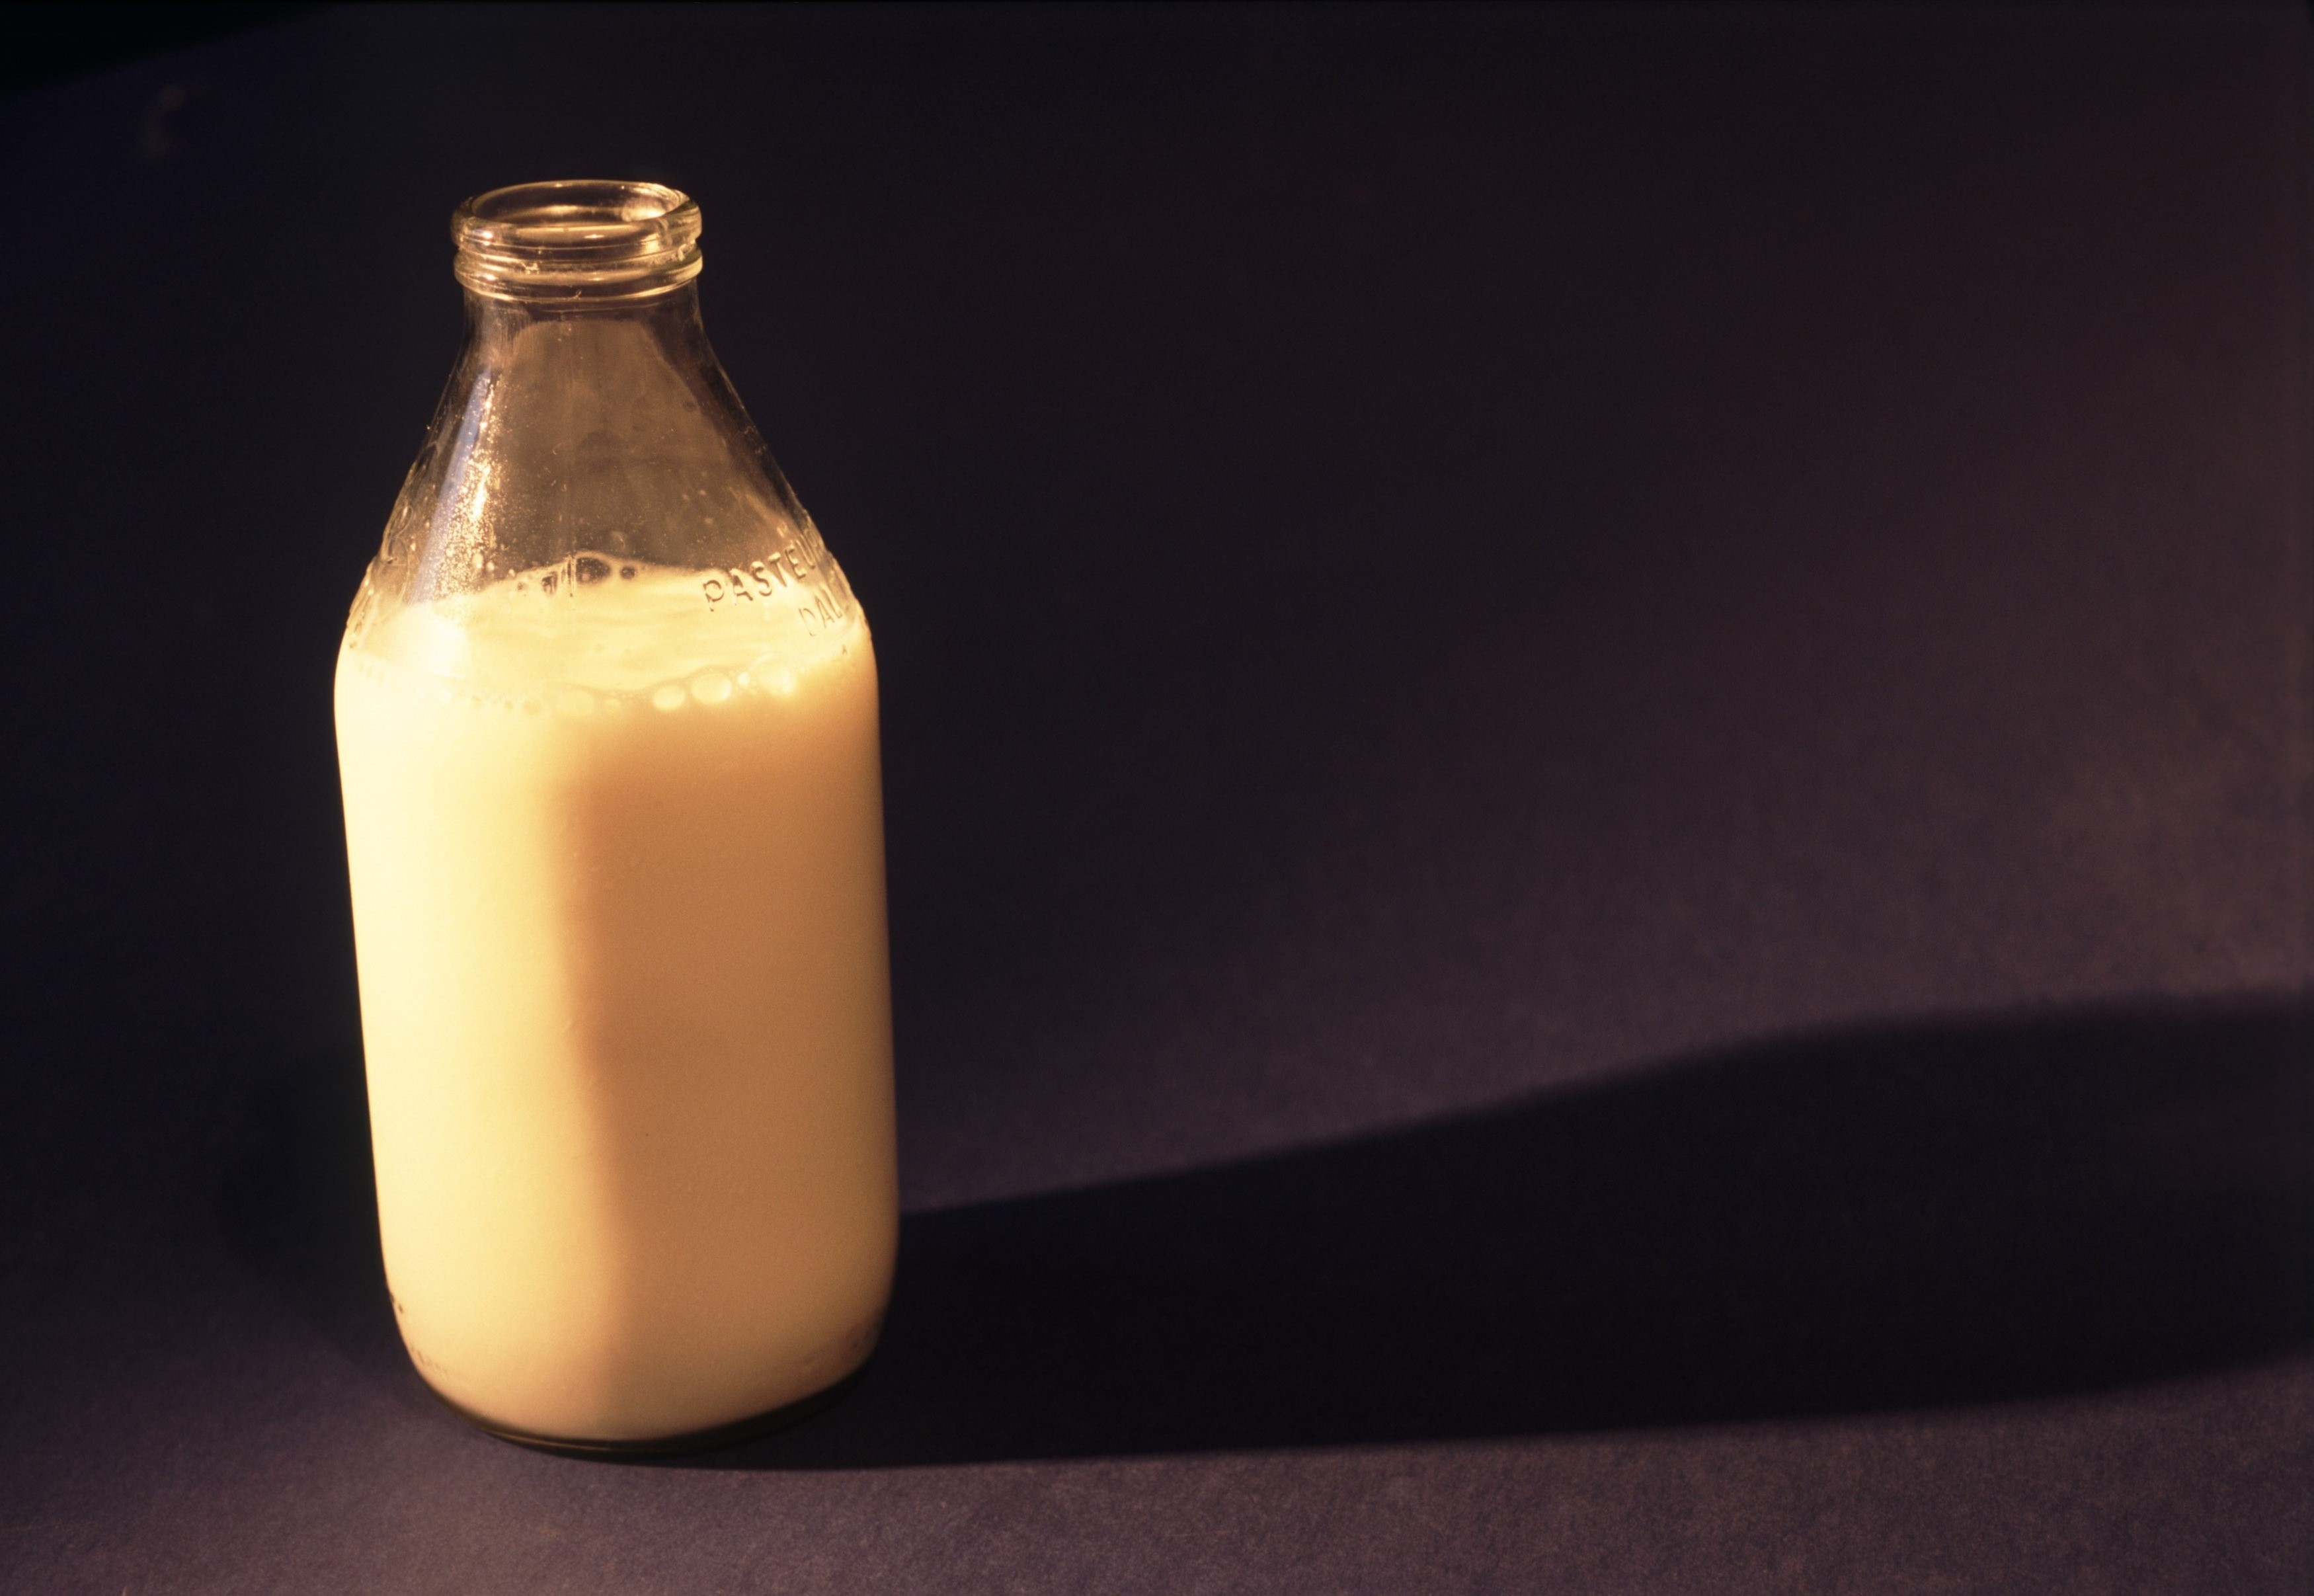 Bottle of milk - Free Stock Image